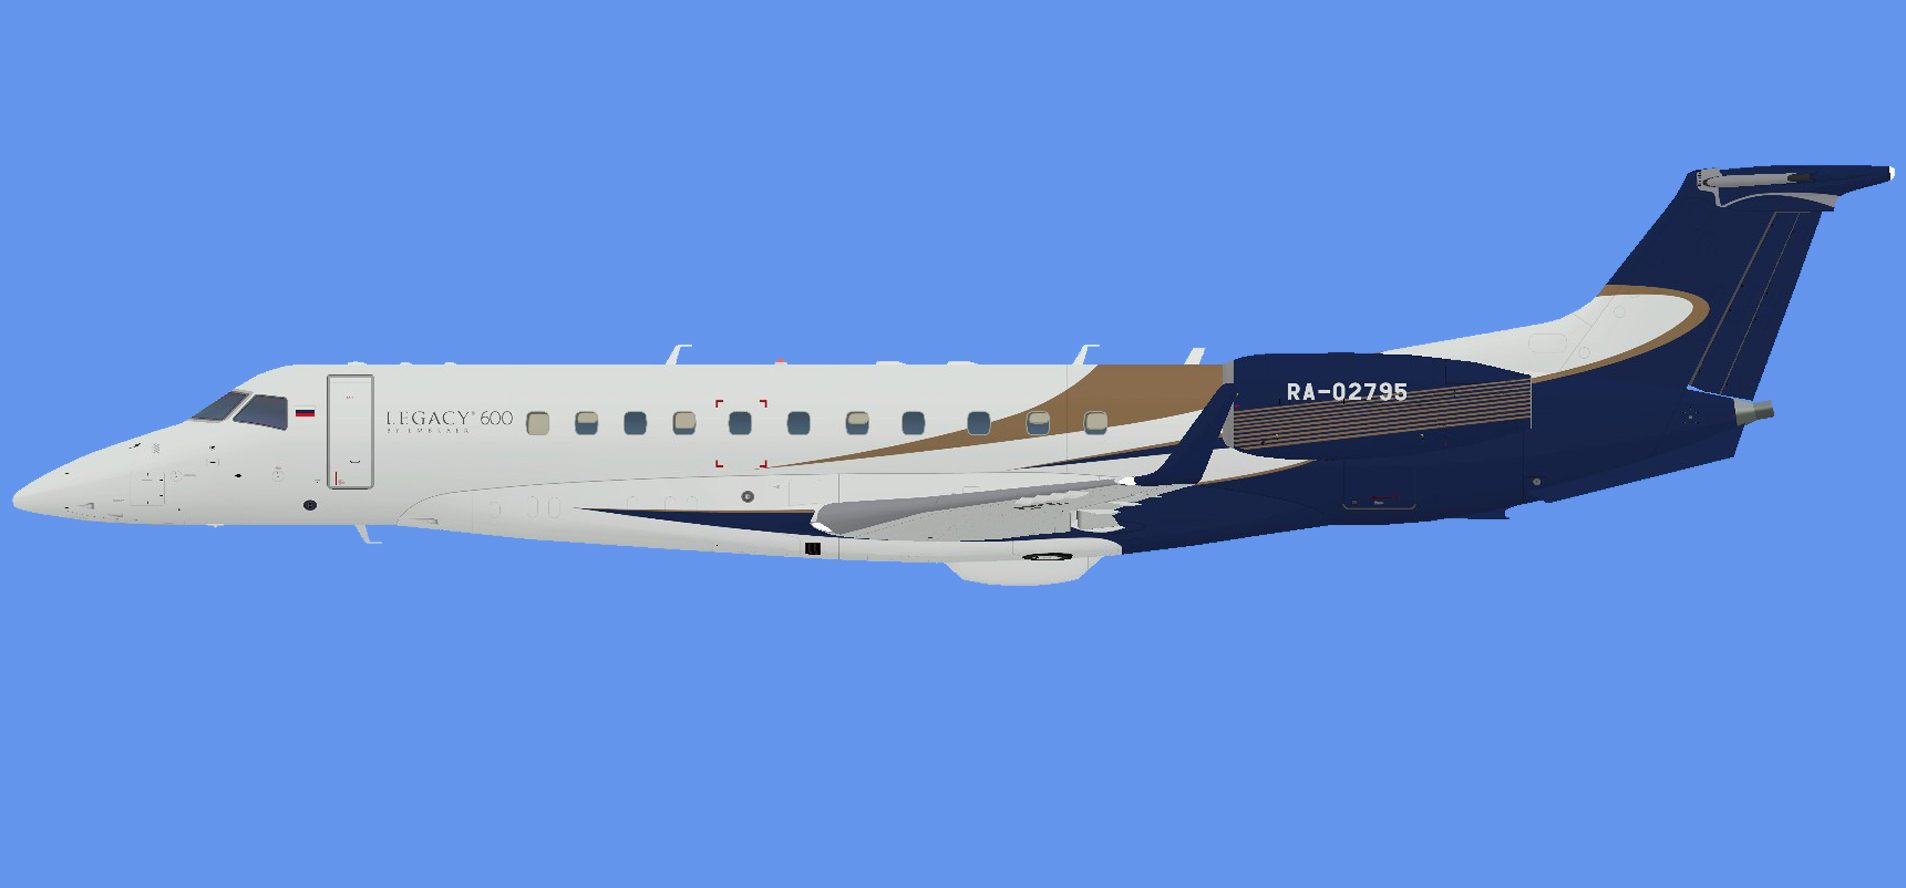 Embraer Legacy 600 RA-02795